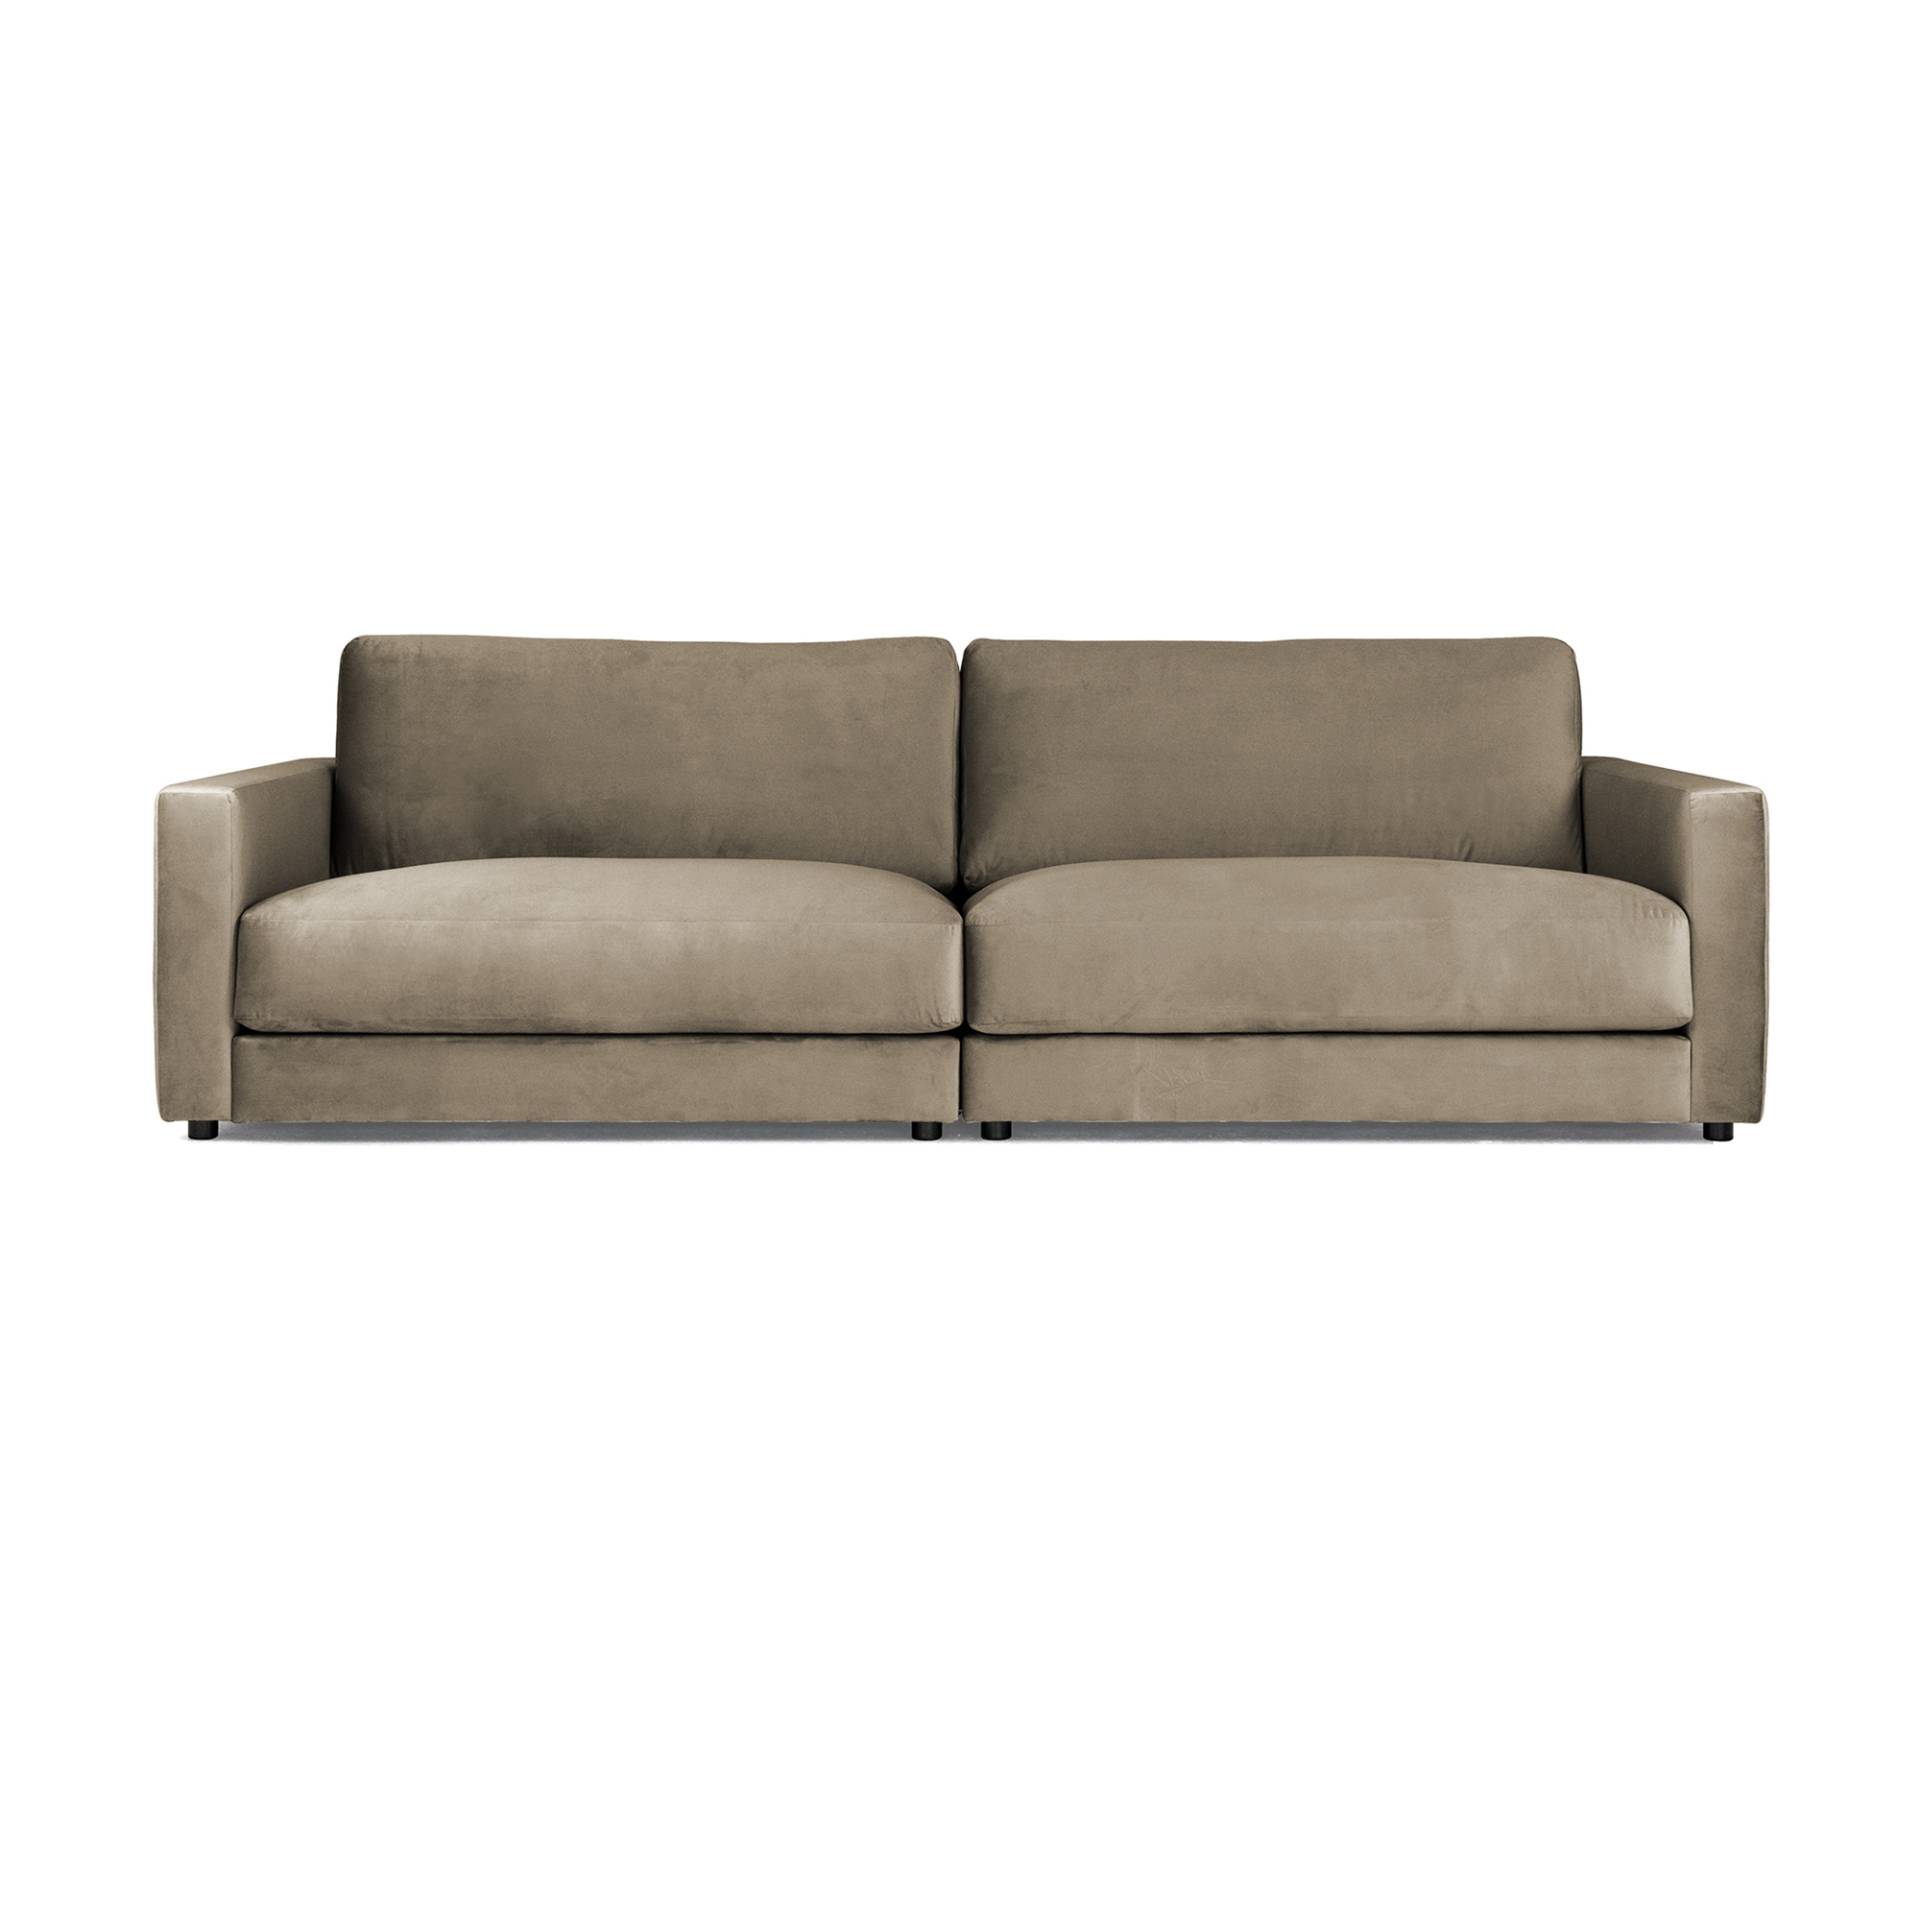 Sitzfeldt - Panama Sofa 3-Sitzer 270x124x82cm - beige/Samt Riviera Davis 16/LxBxH 270x124x82cm von Sitzfeldt